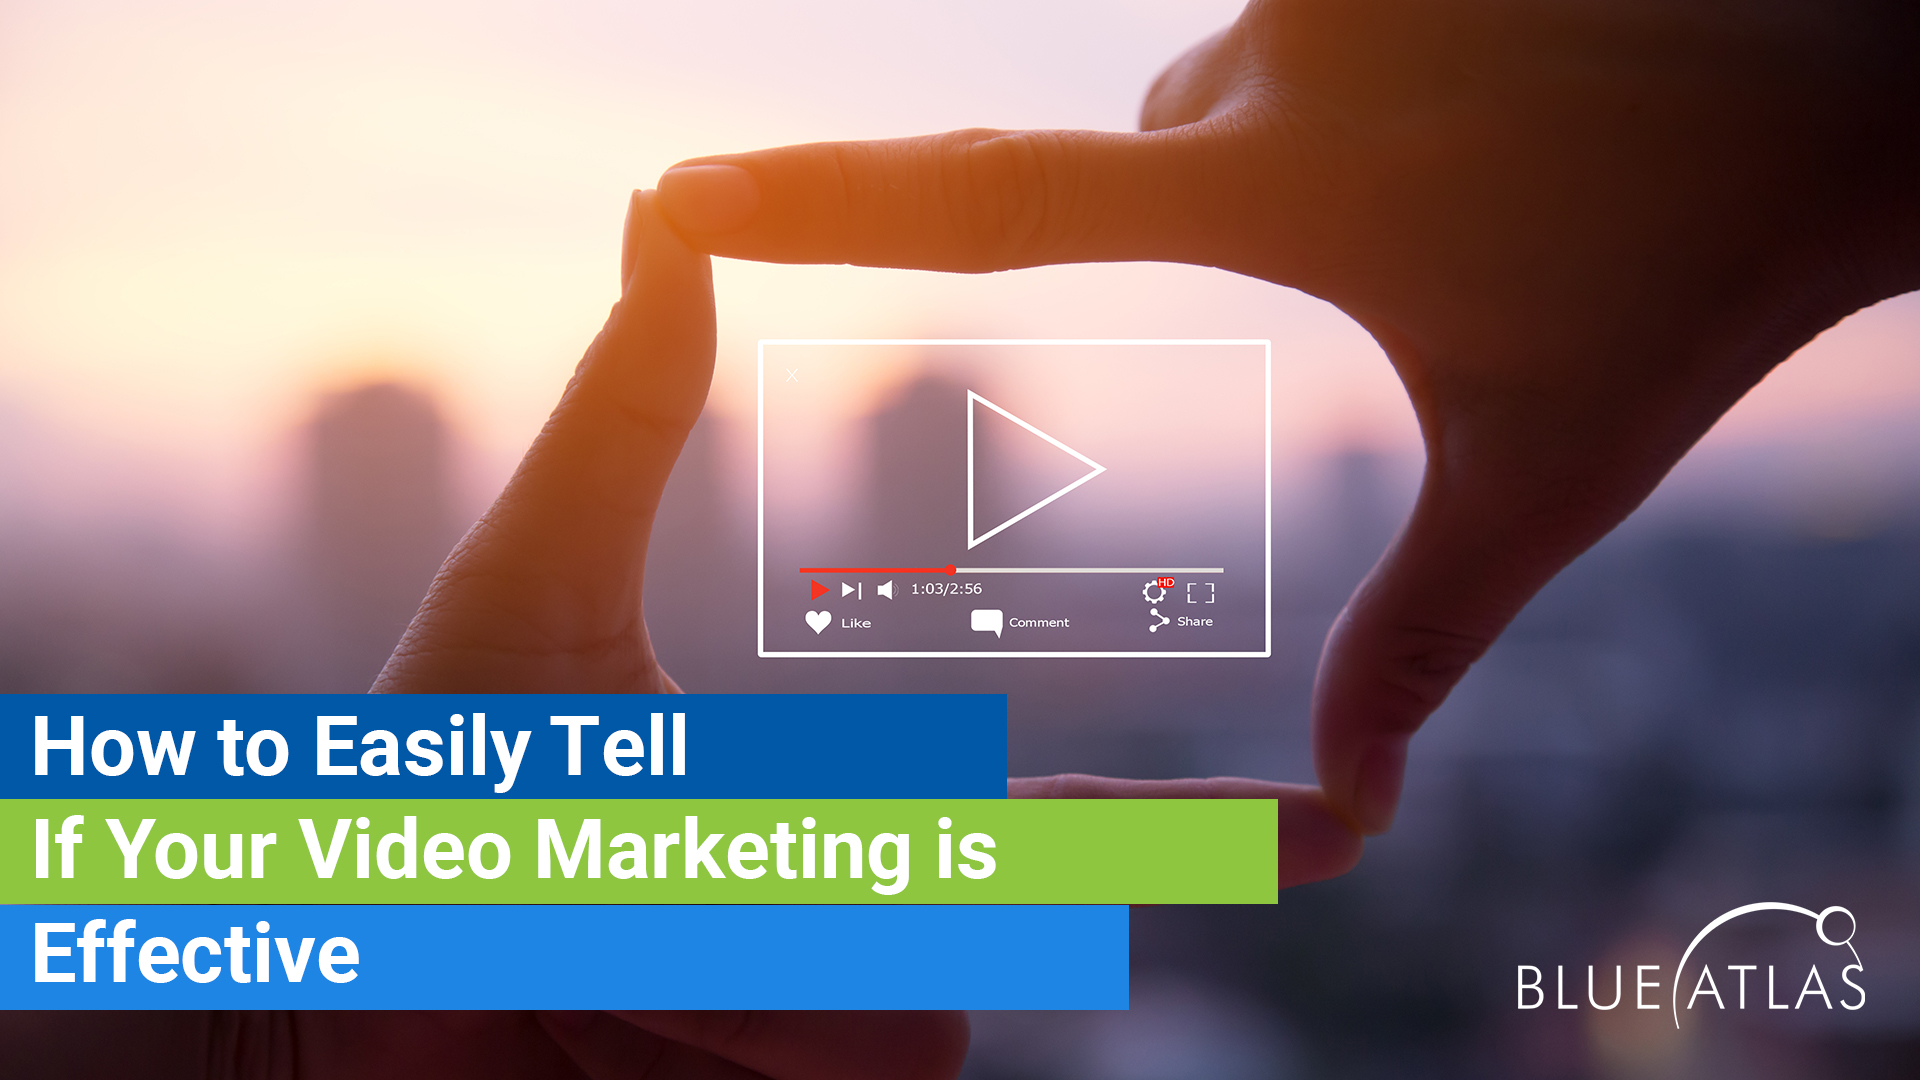 Video Marketing Effectiveness